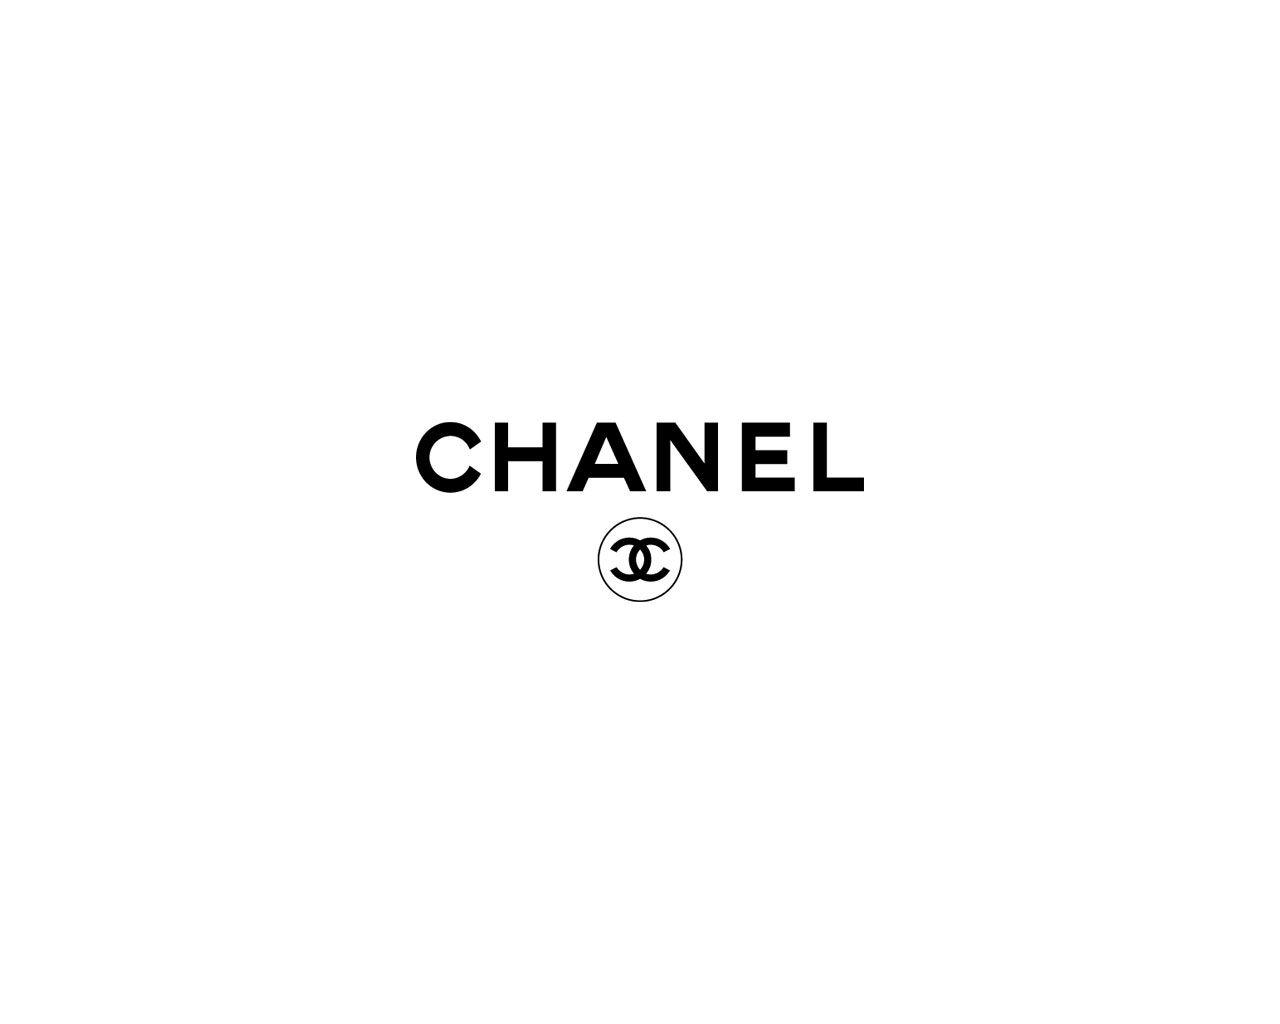 Chanel Desktop Wallpapers - Top Free Chanel Desktop Backgrounds ...